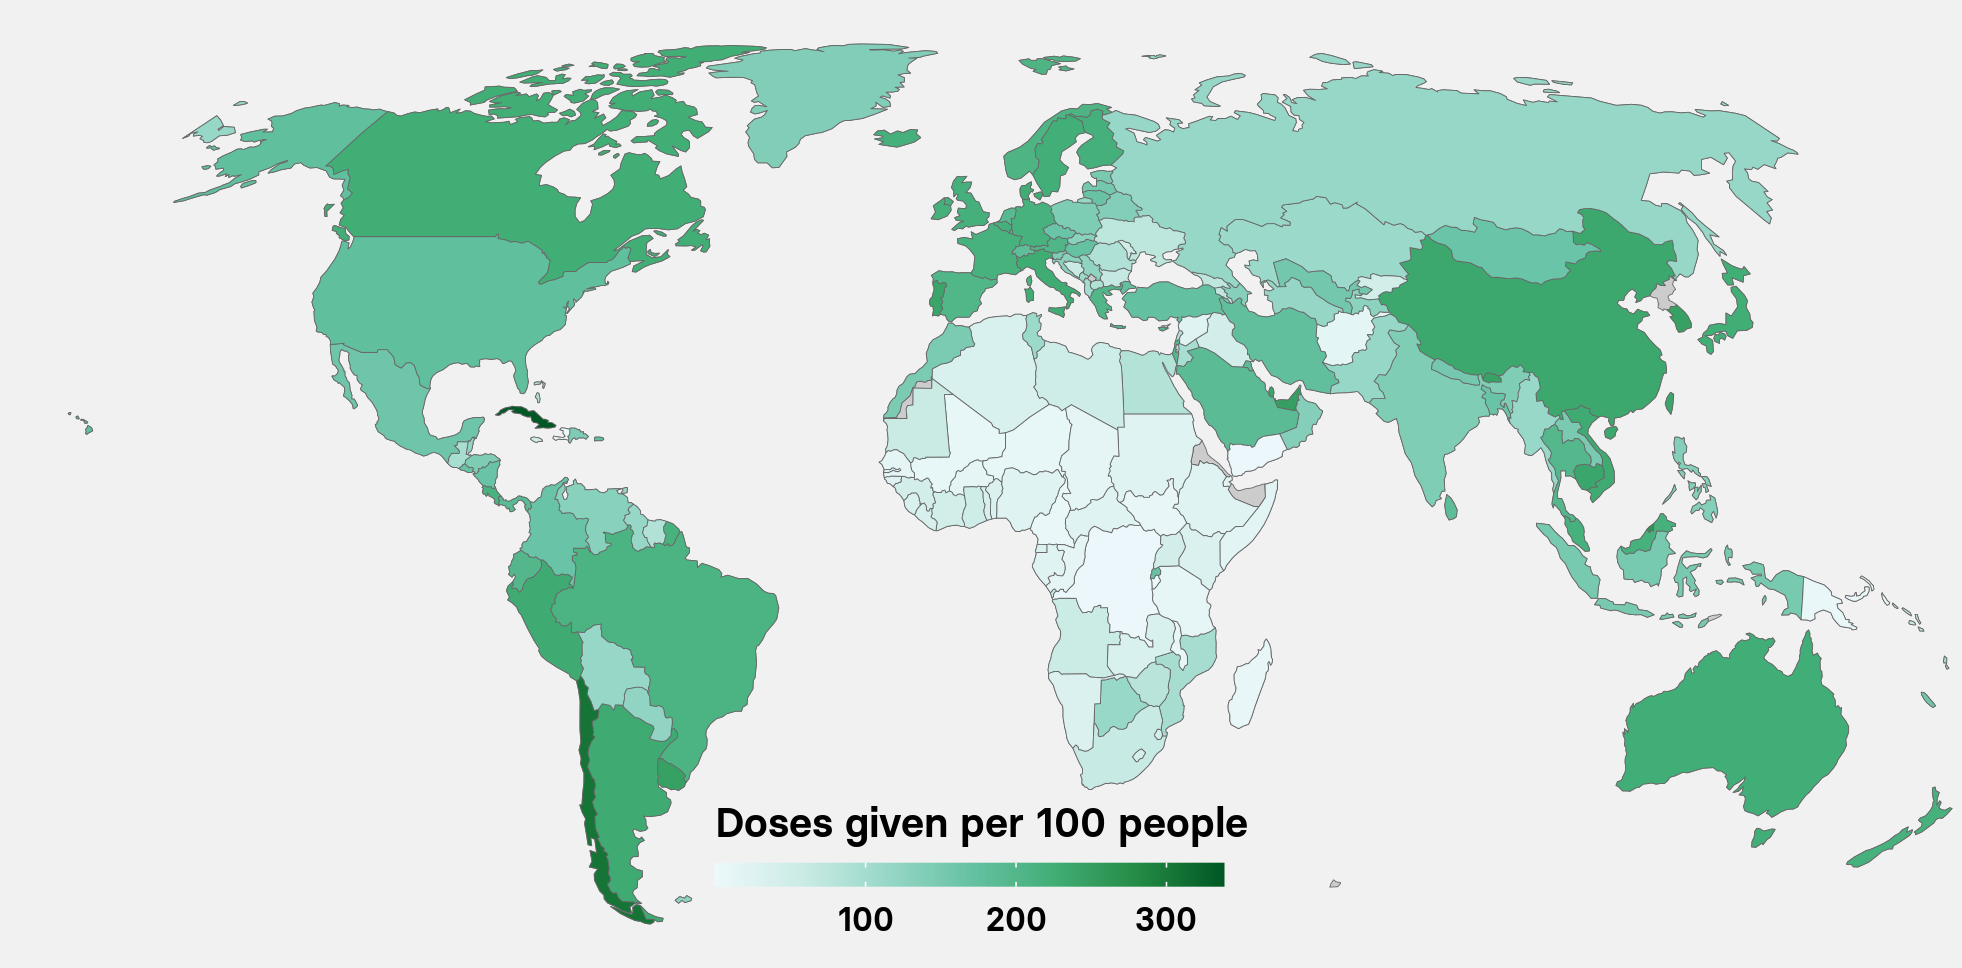 Vaccination per 100 people worldwide